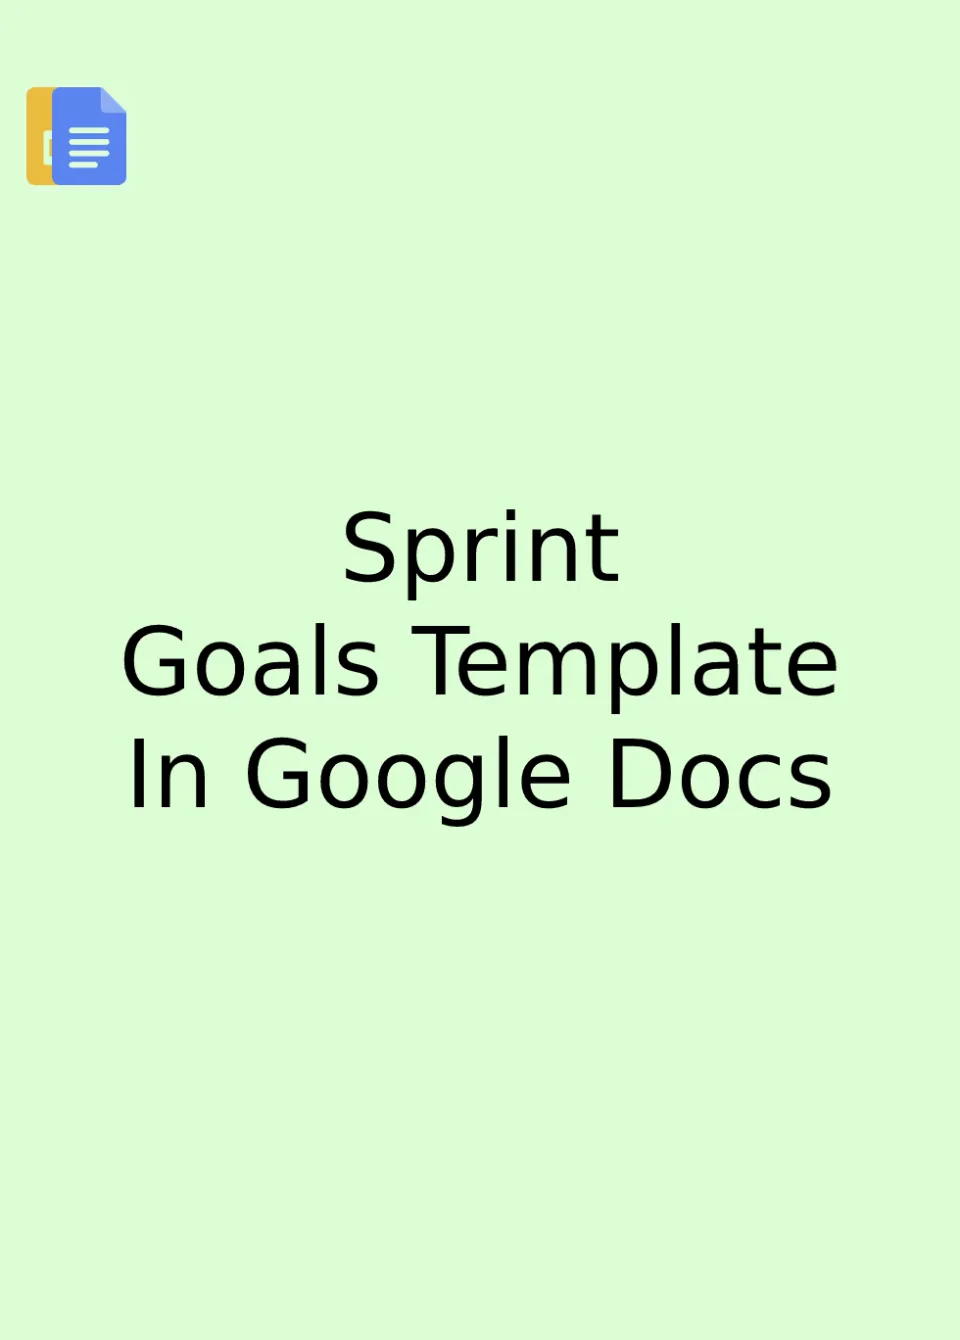 Sprint Goal Template Google Docs